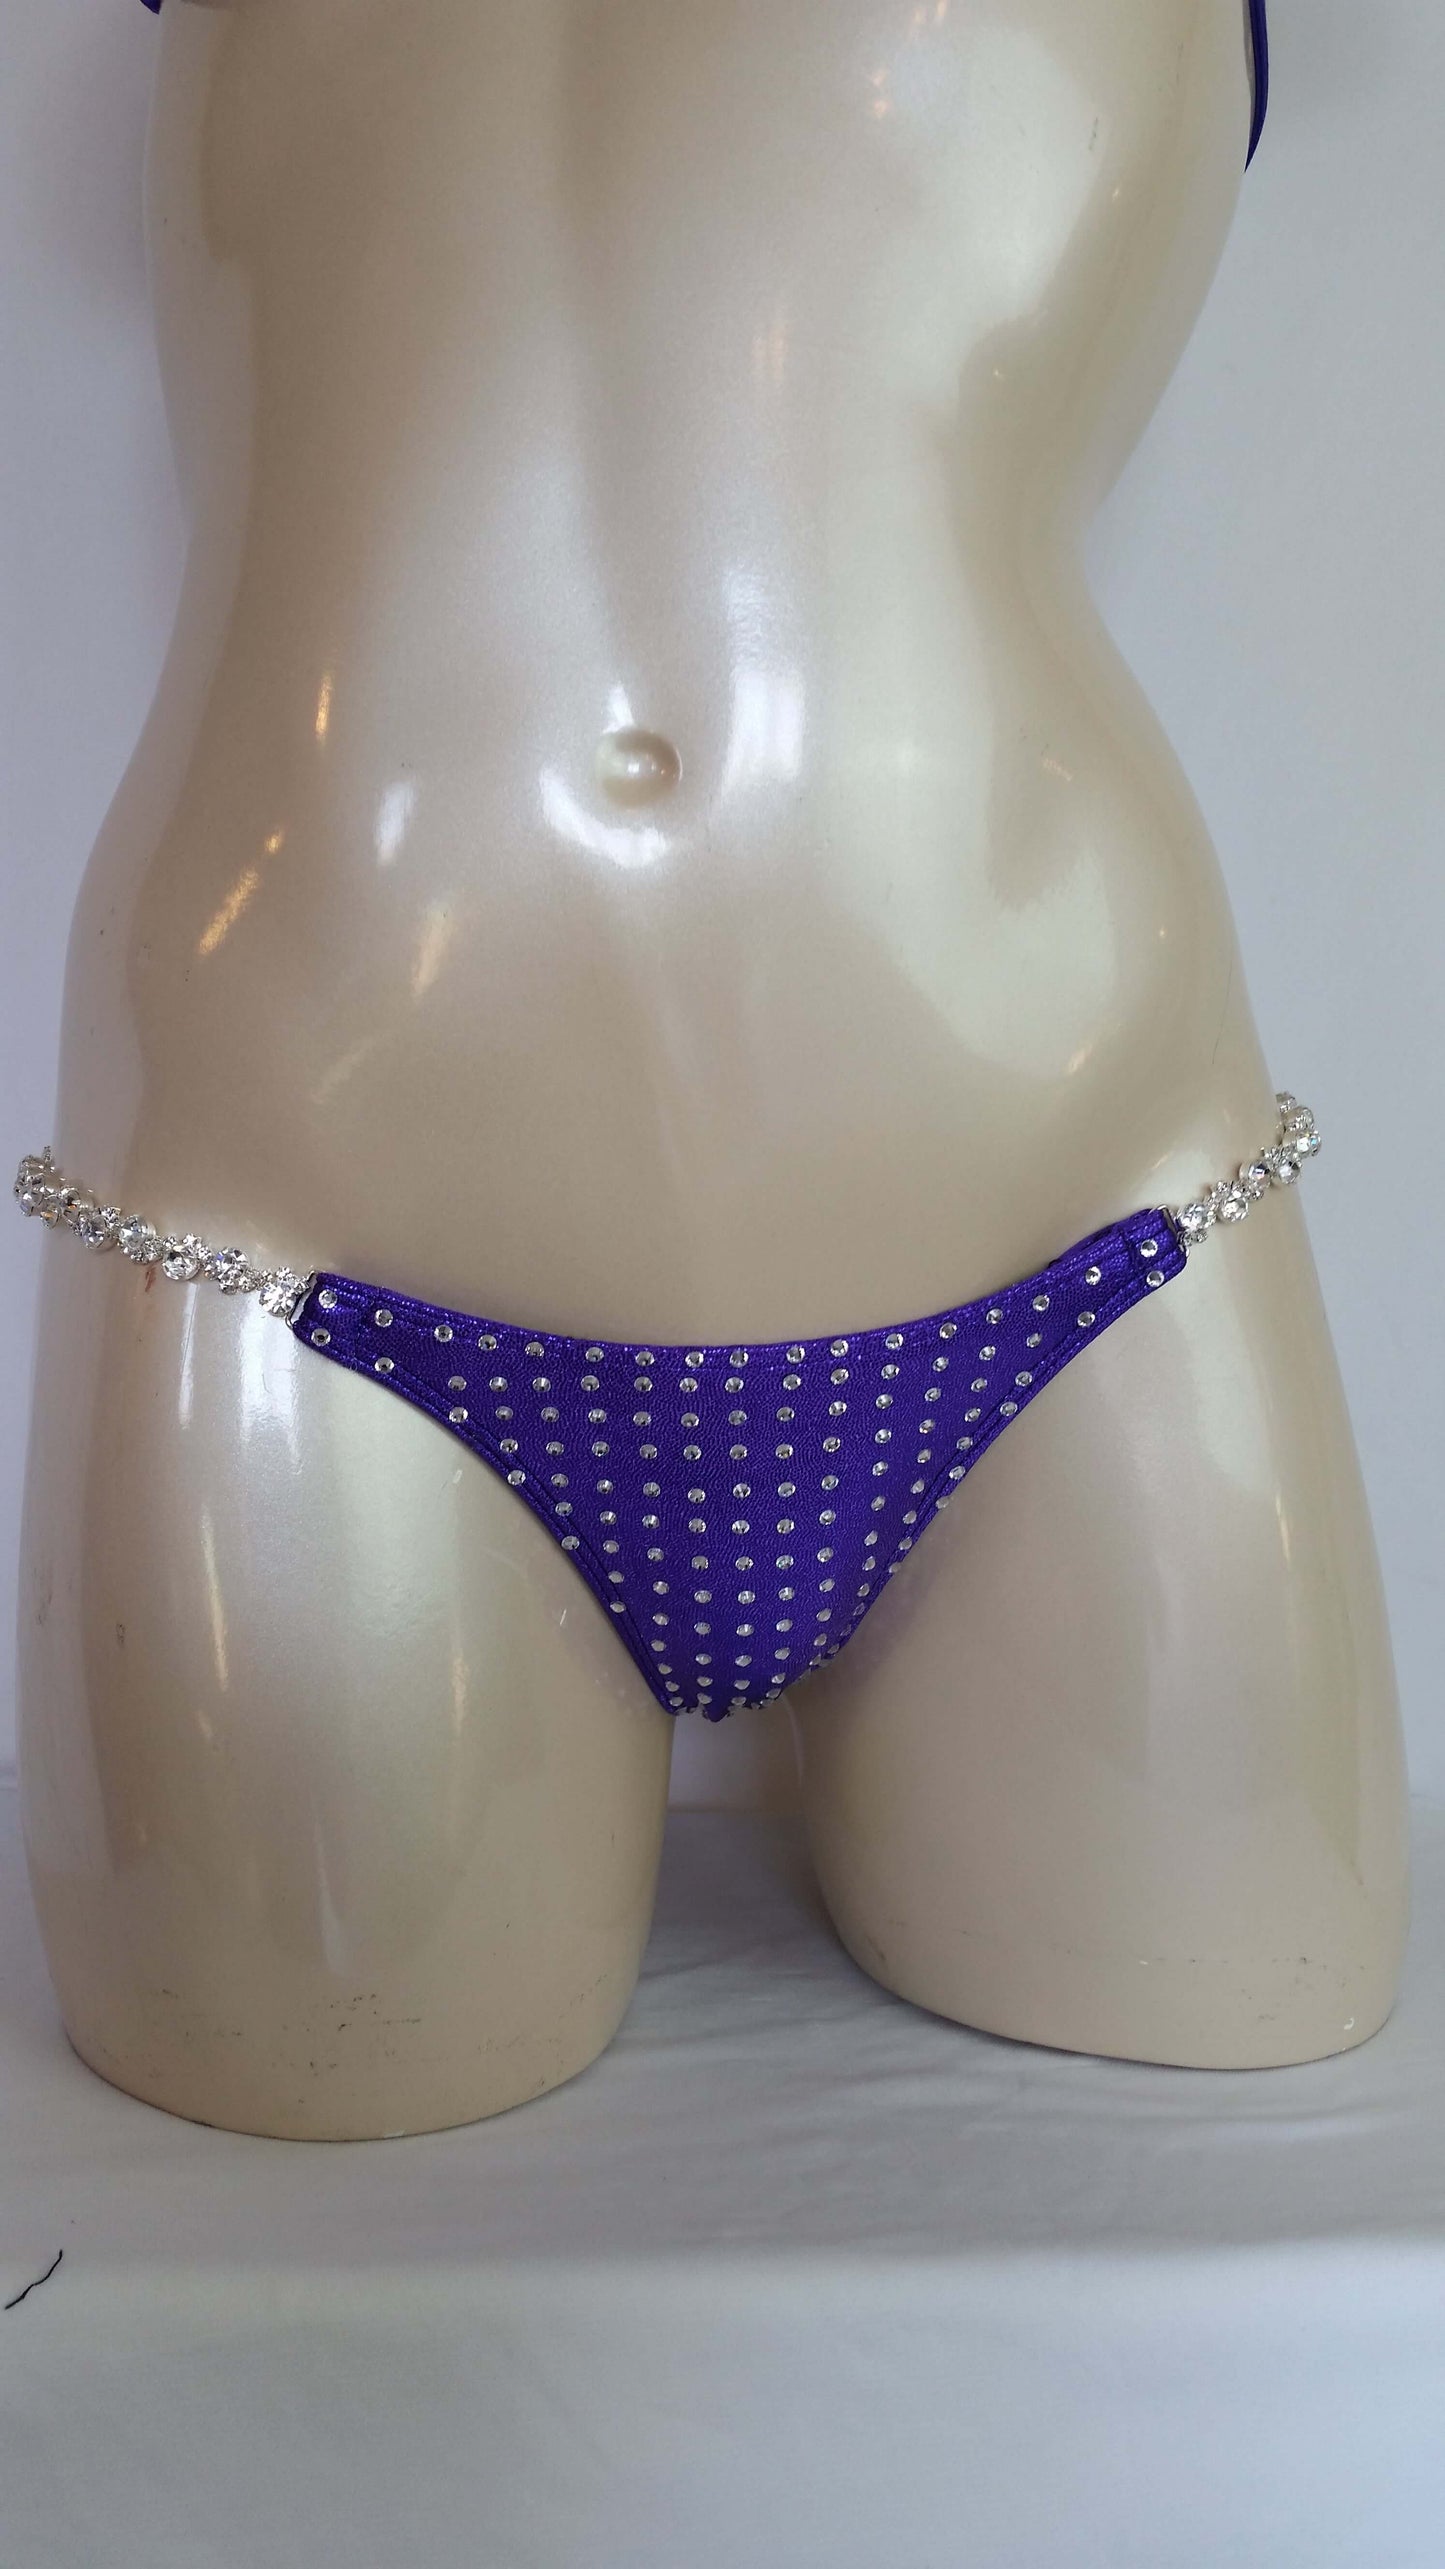 Purple bikini with crystal rhinestone in a linear pattern